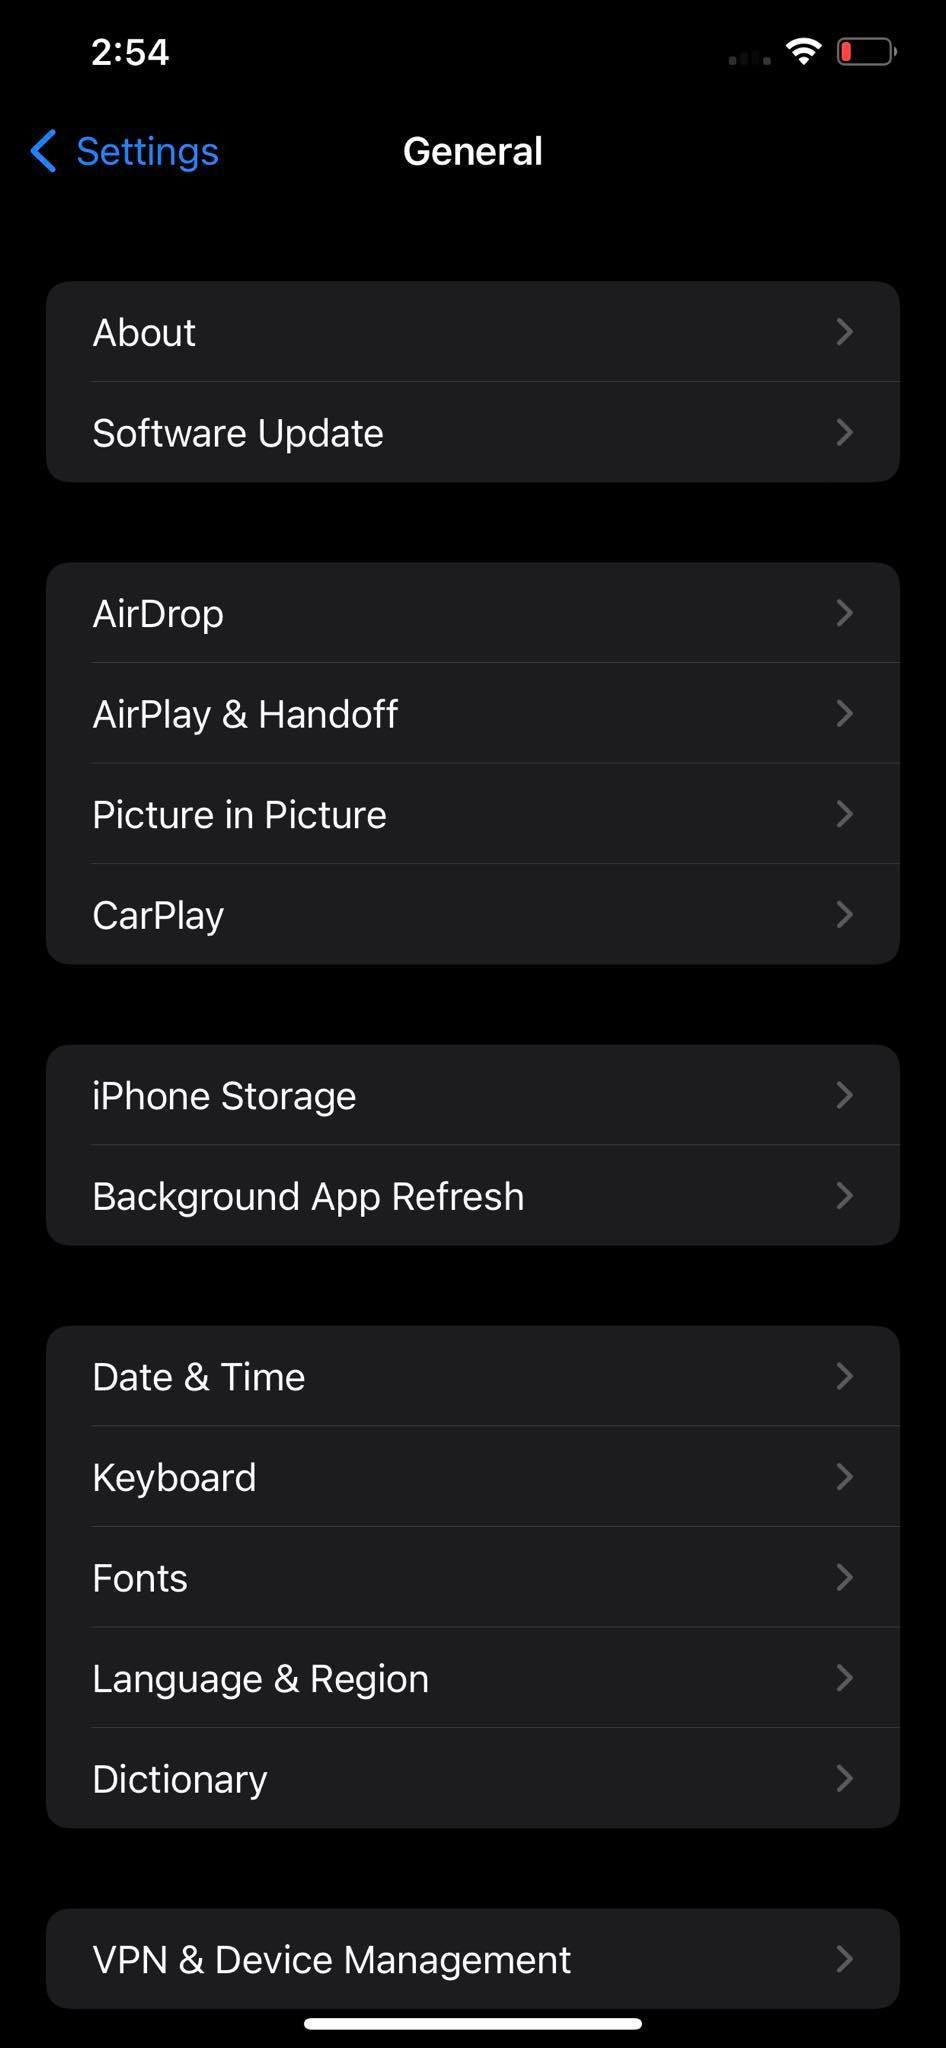 iPhone Storage Option in General Settings of iOS